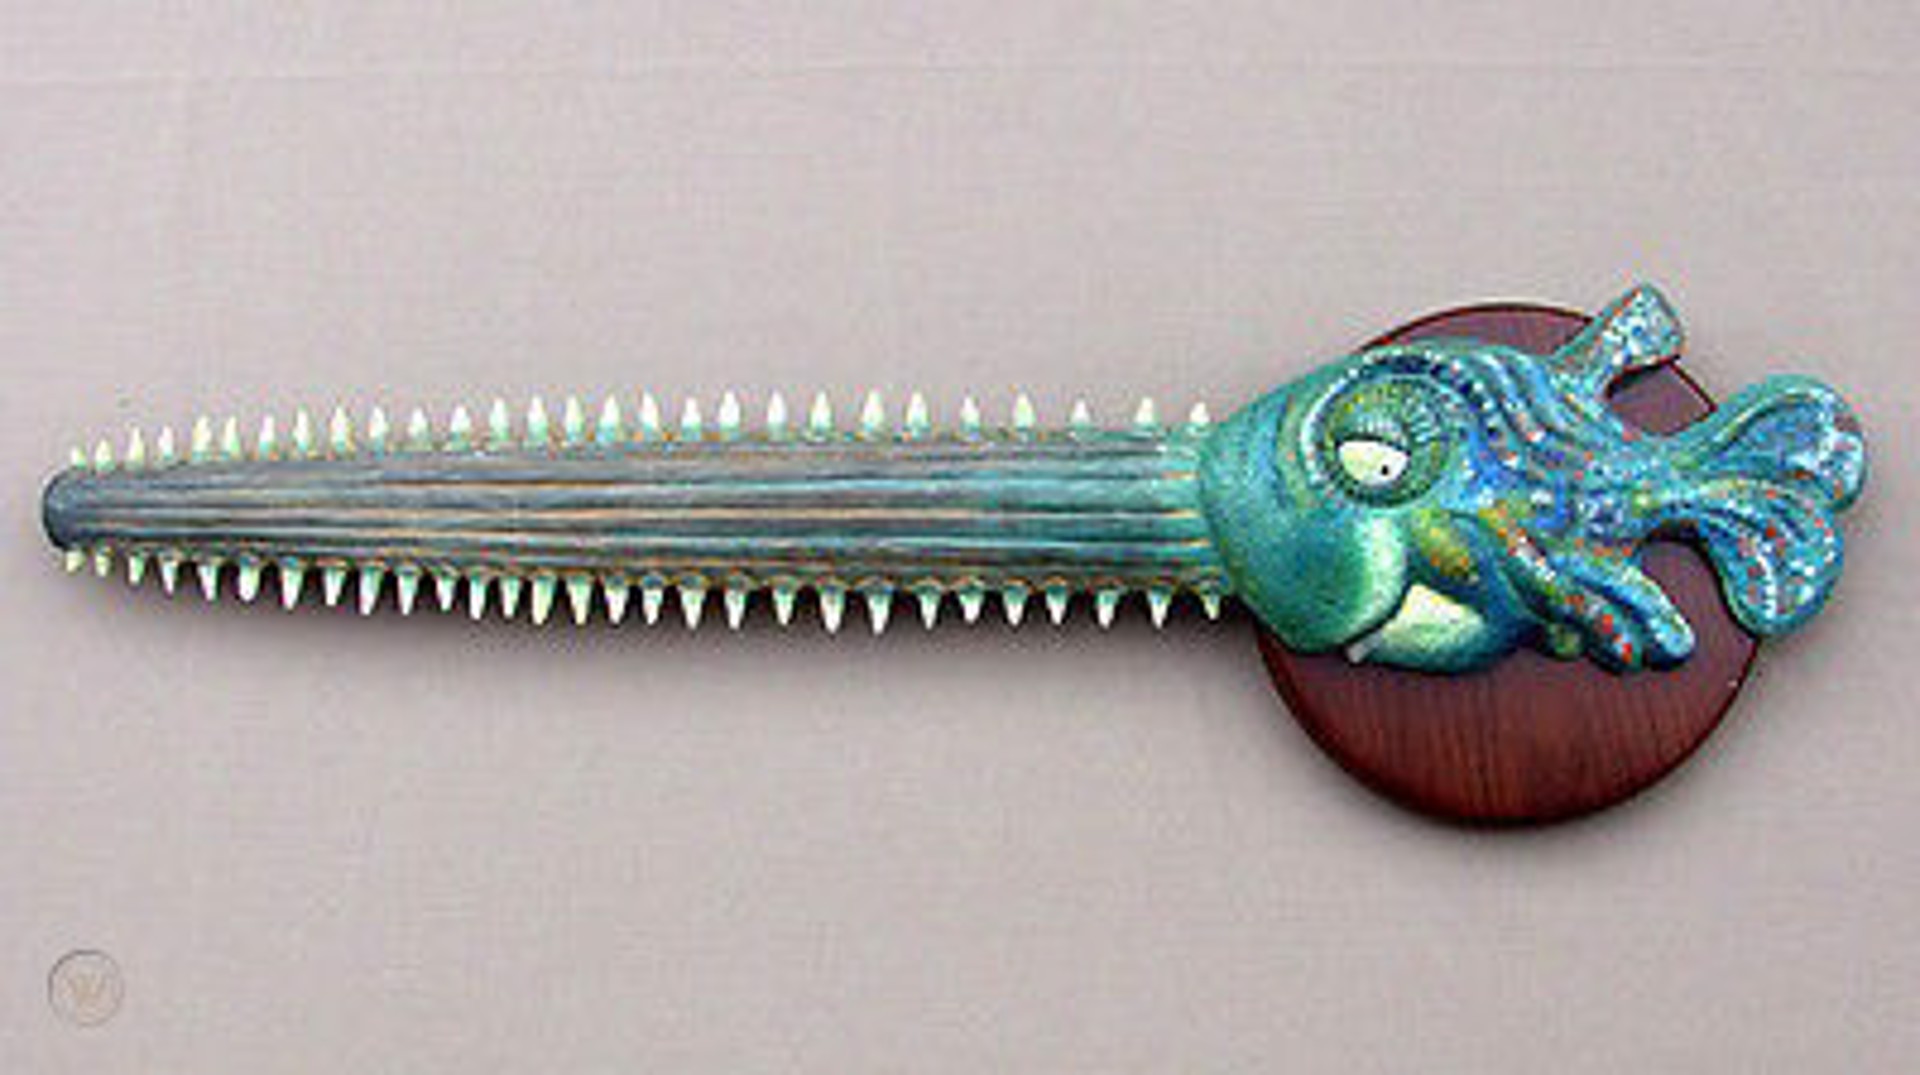 Sawfish (Taxidermy) by Dr. Seuss